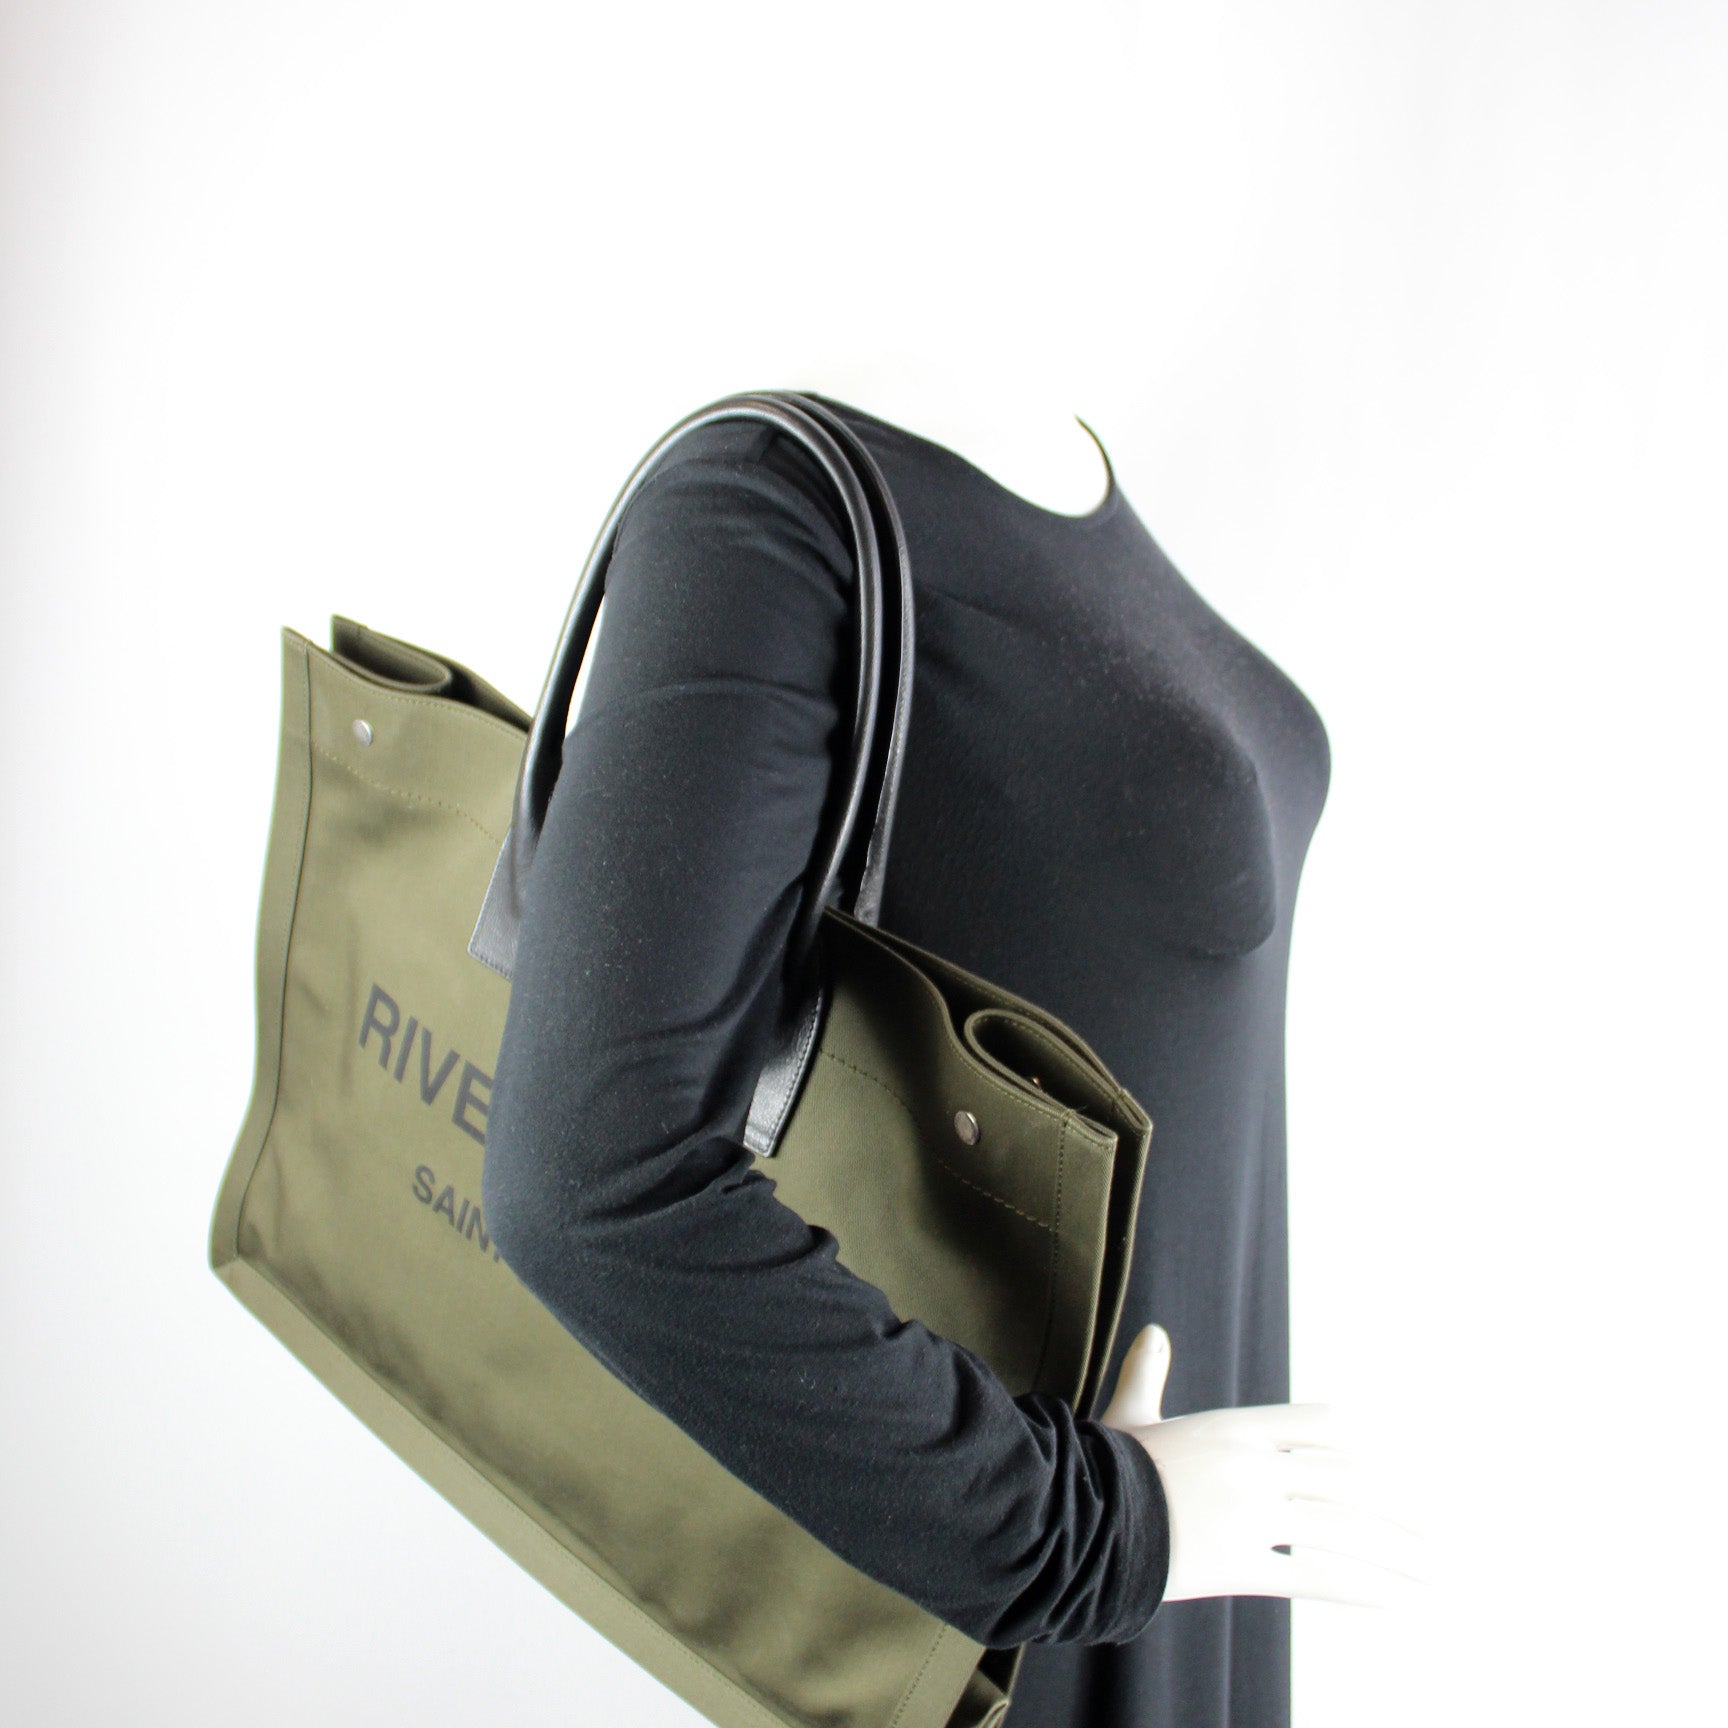 Rive Gauche Tote Bag Small – Keeks Designer Handbags